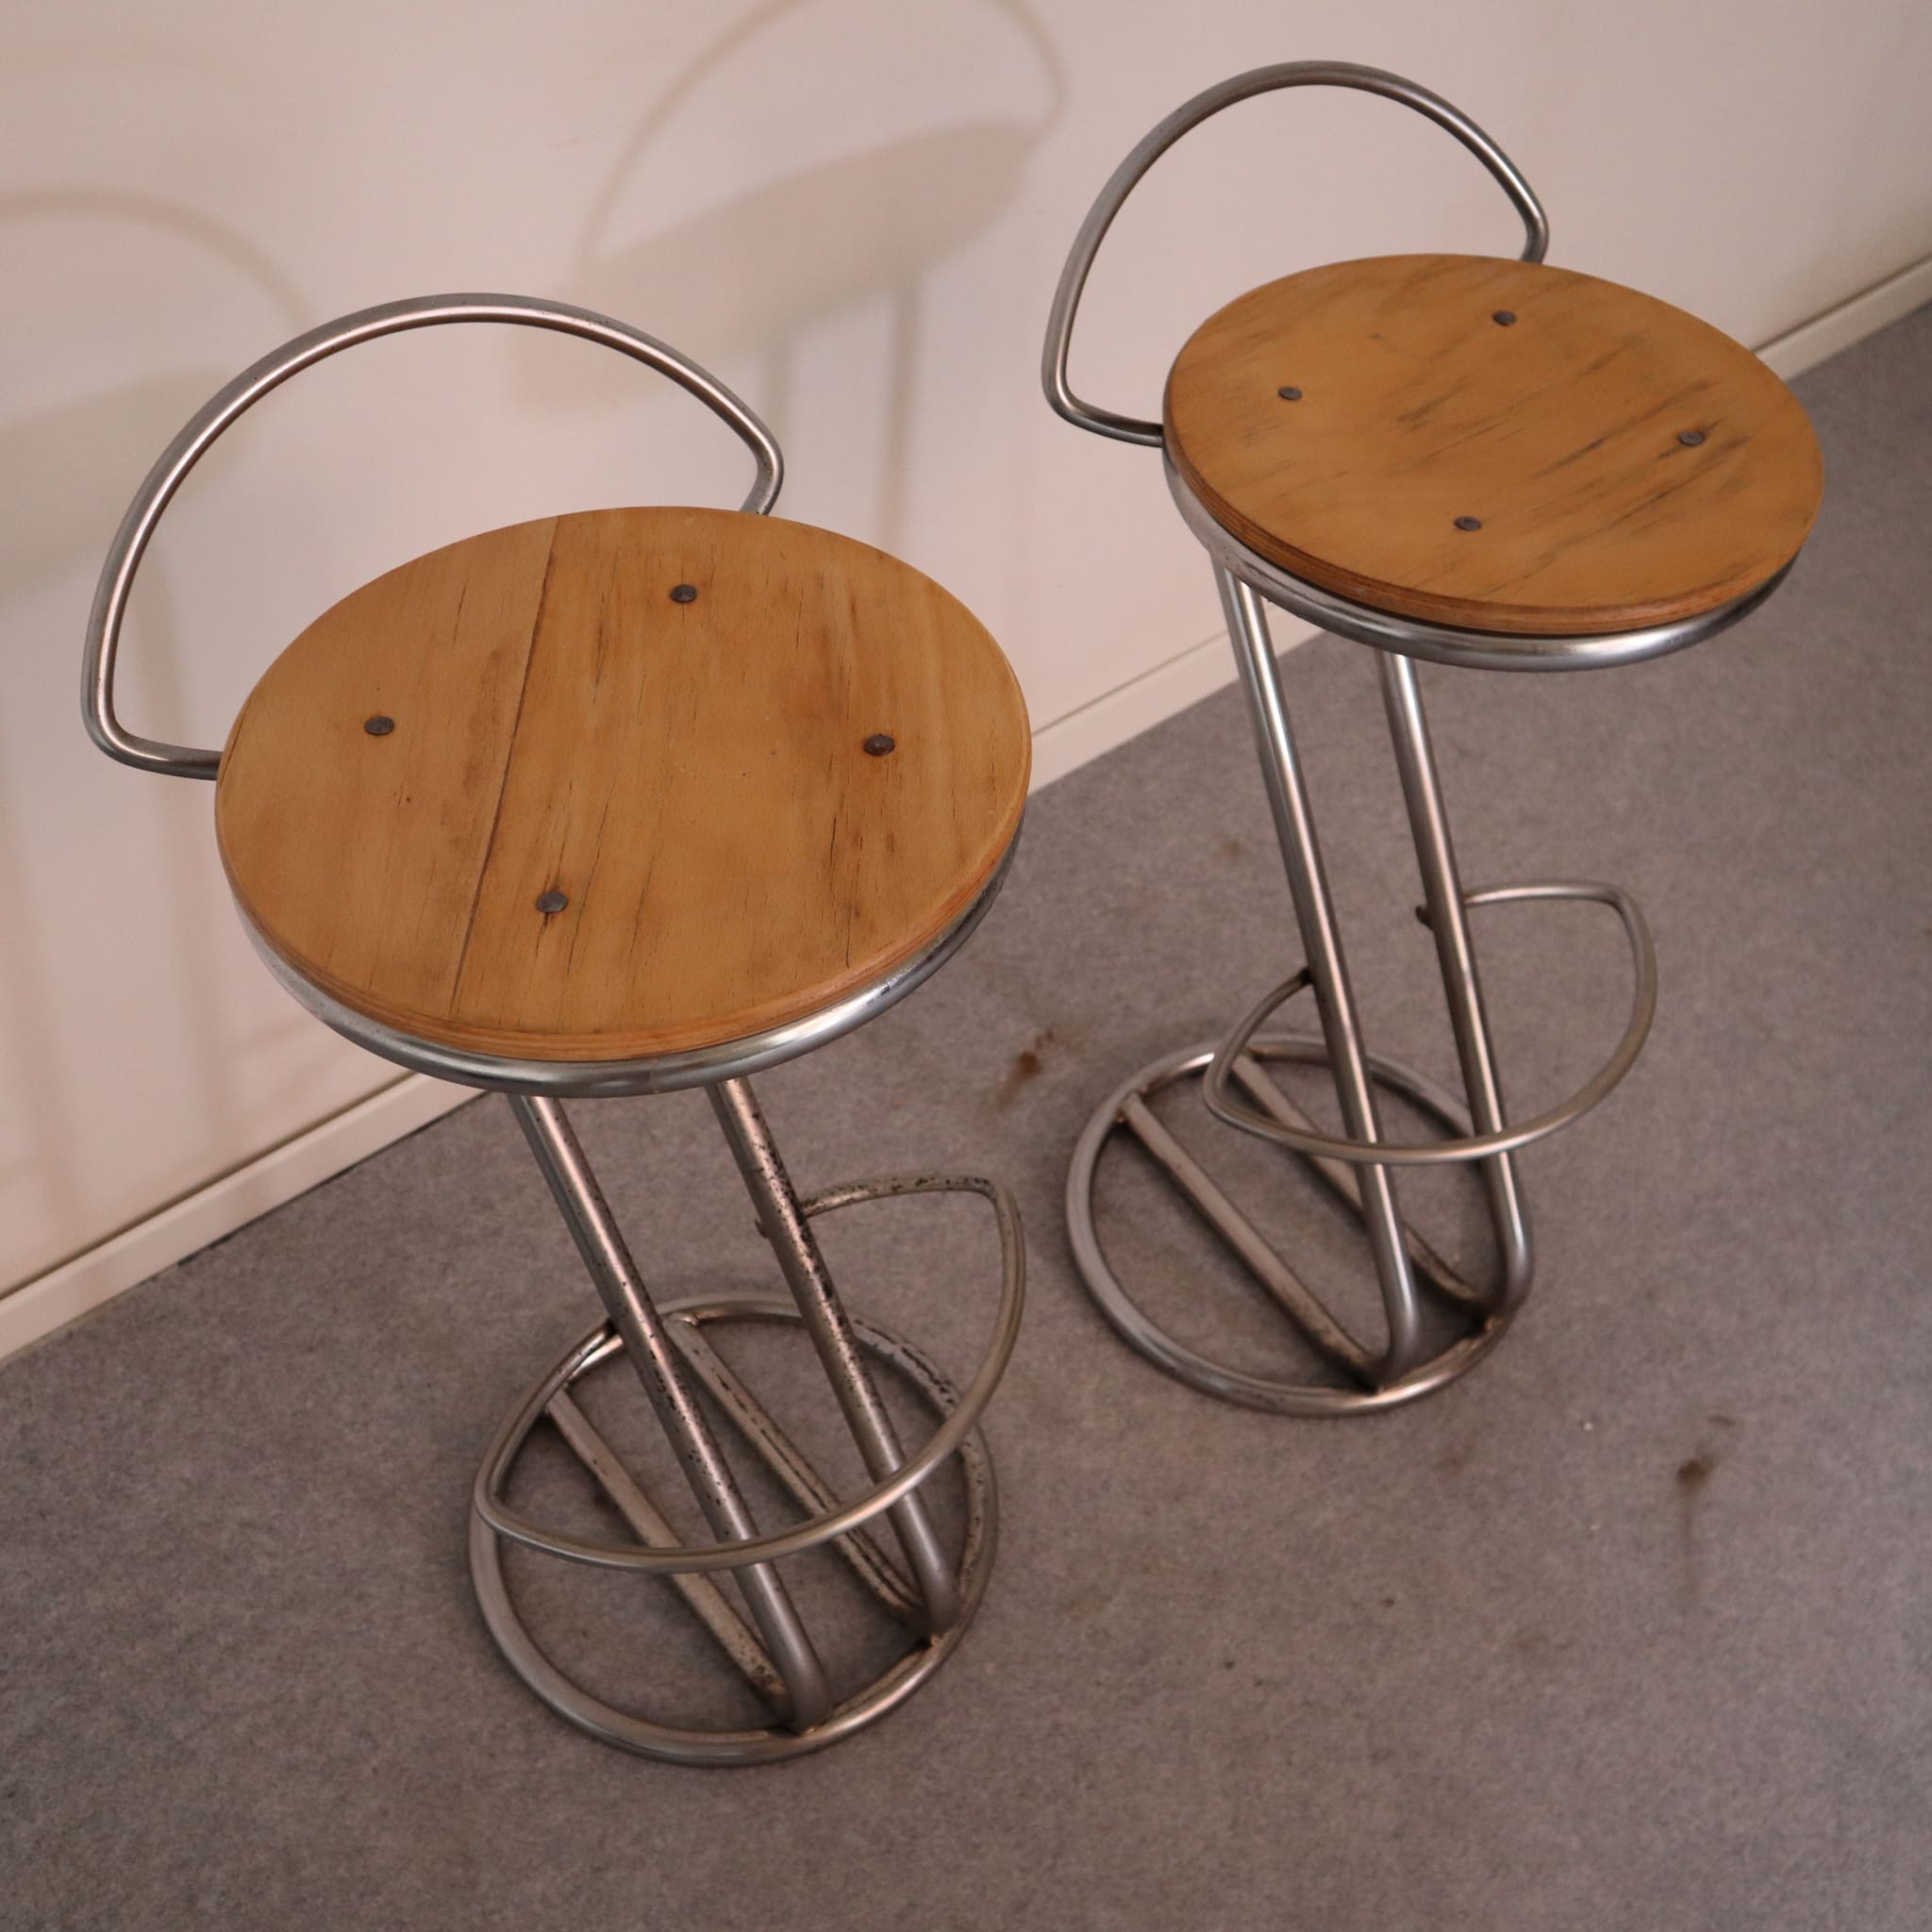 visionidepoca-visioni-depoca-metal-wood-industrial-vintage-design-furniture-modern-antiques-made-italy-stools-stool-3